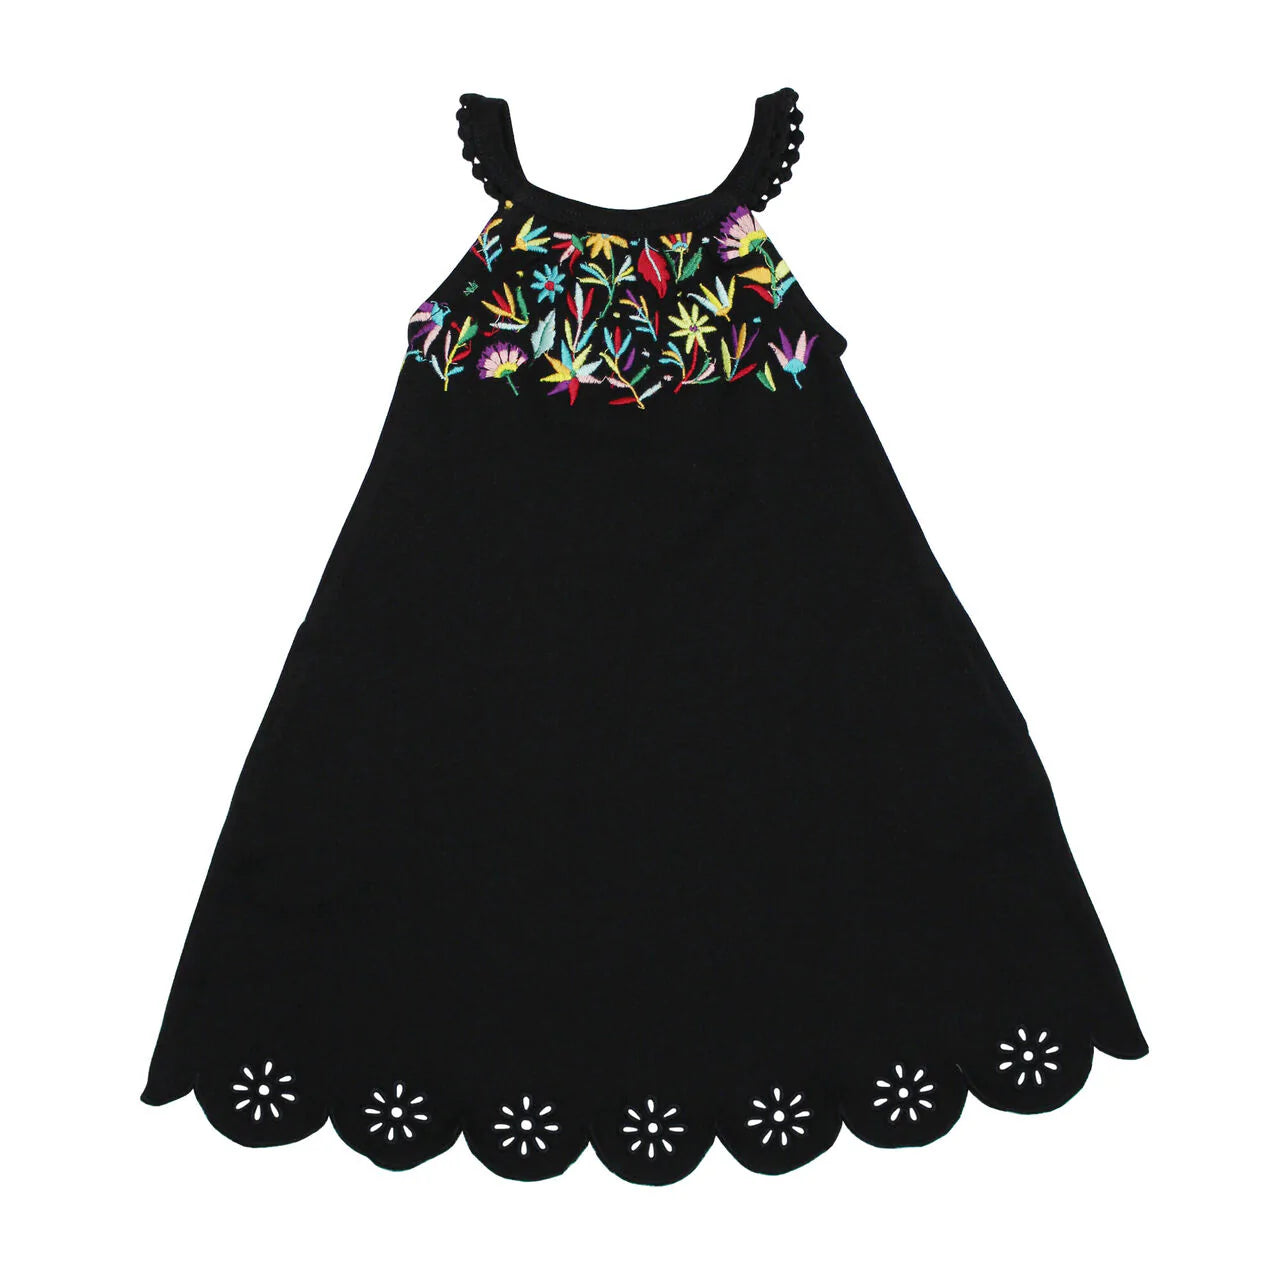 Twirl Dress (Pockets) - Black Floral Embroidered